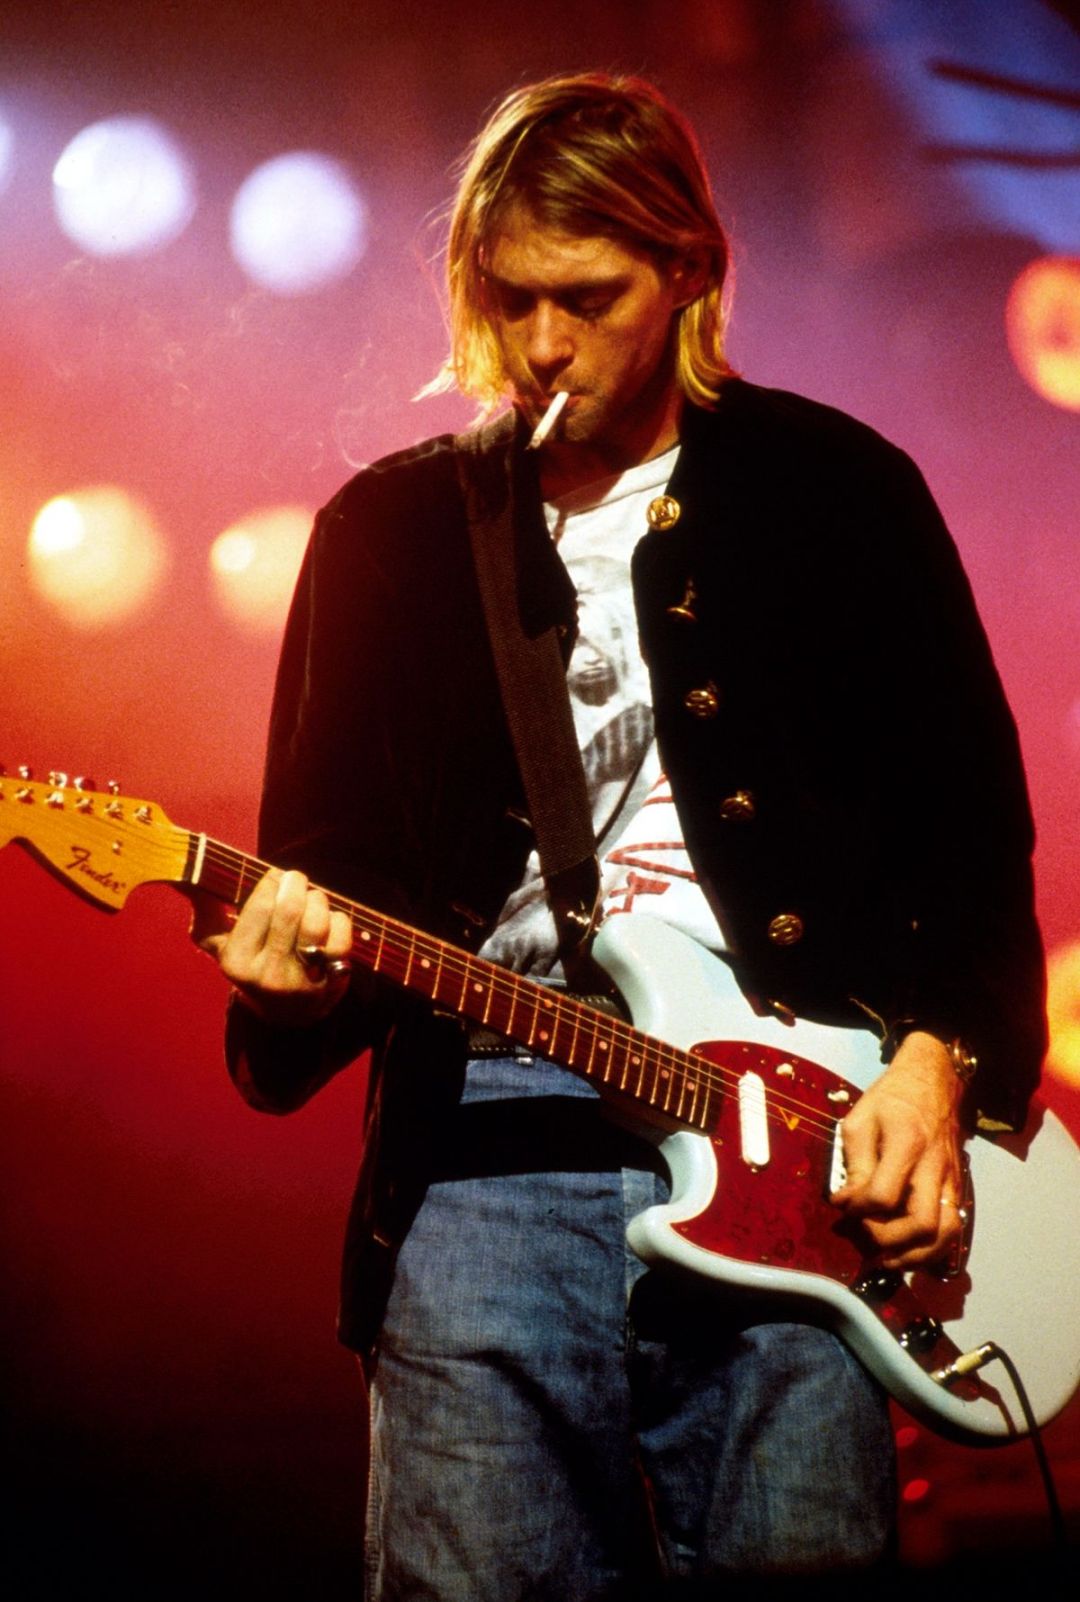 Android, Iphone, Desktop Hd Backgrounds / Wallpapers - Kurt Cobain Guitar Poster , HD Wallpaper & Backgrounds